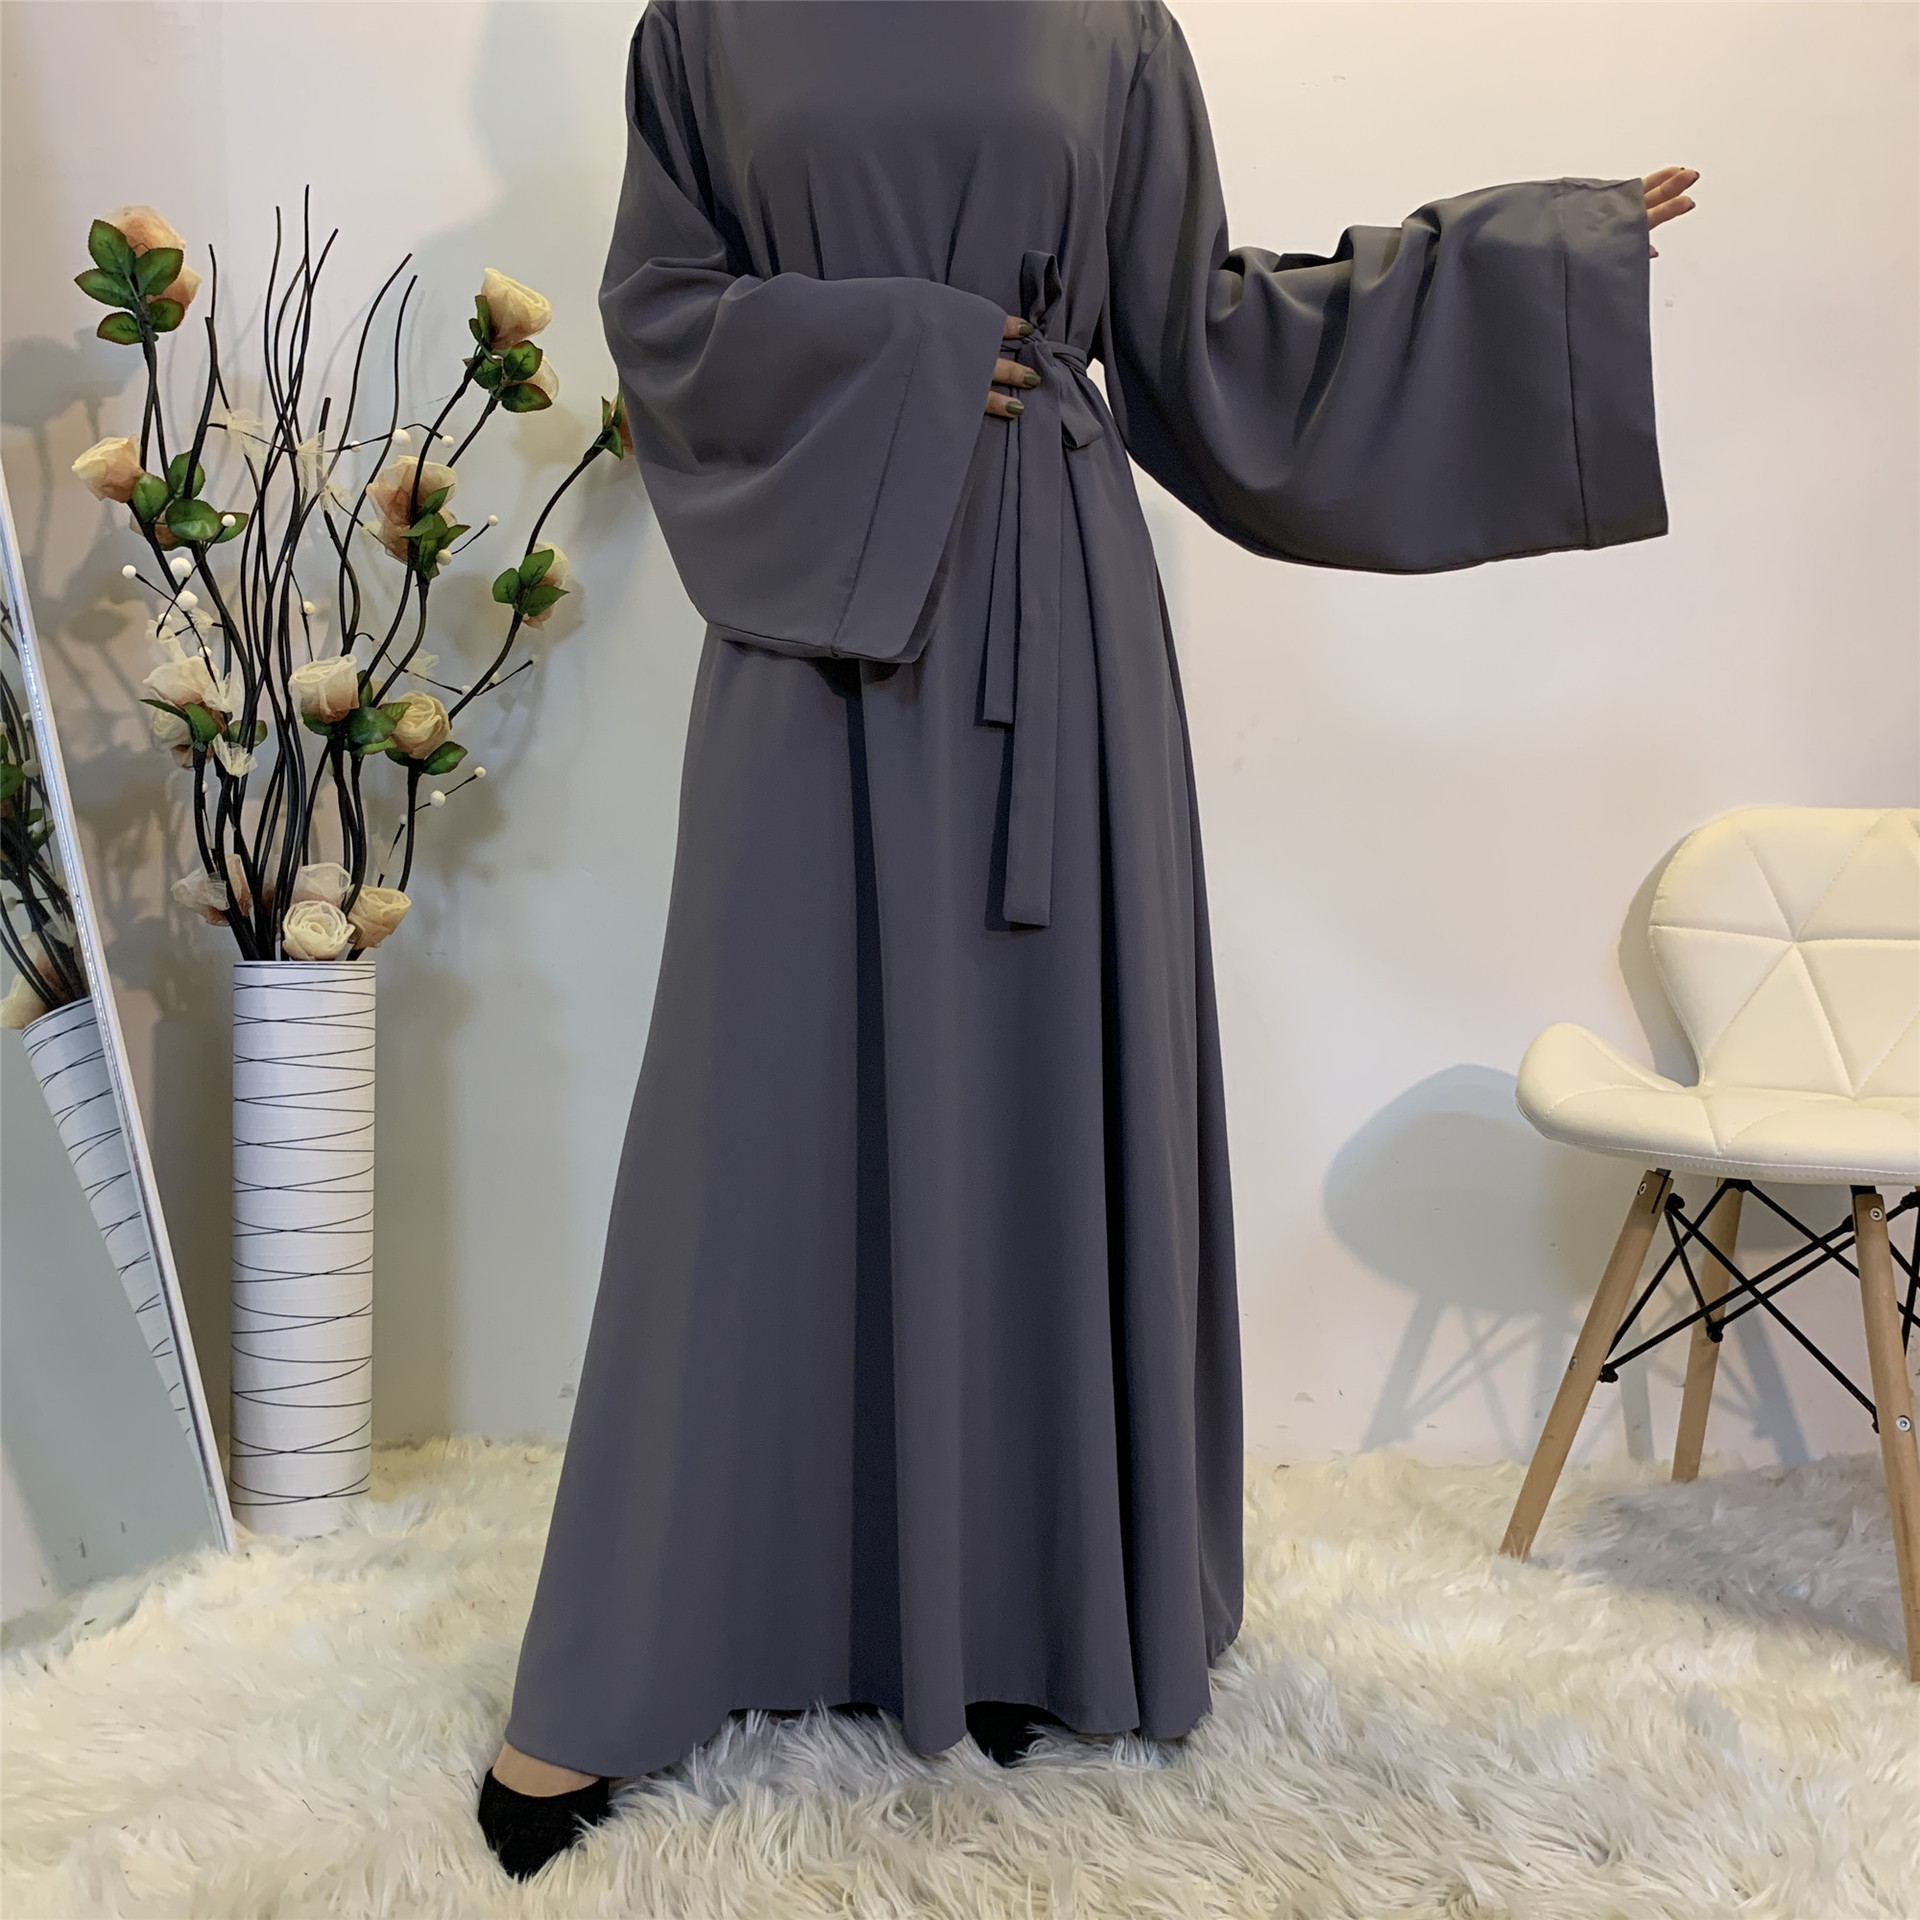 Muslim-Fashion-Hijab-Dubai-Abaya-Long-Dresses-Women-With-Sashes-Islam-Clothing-A